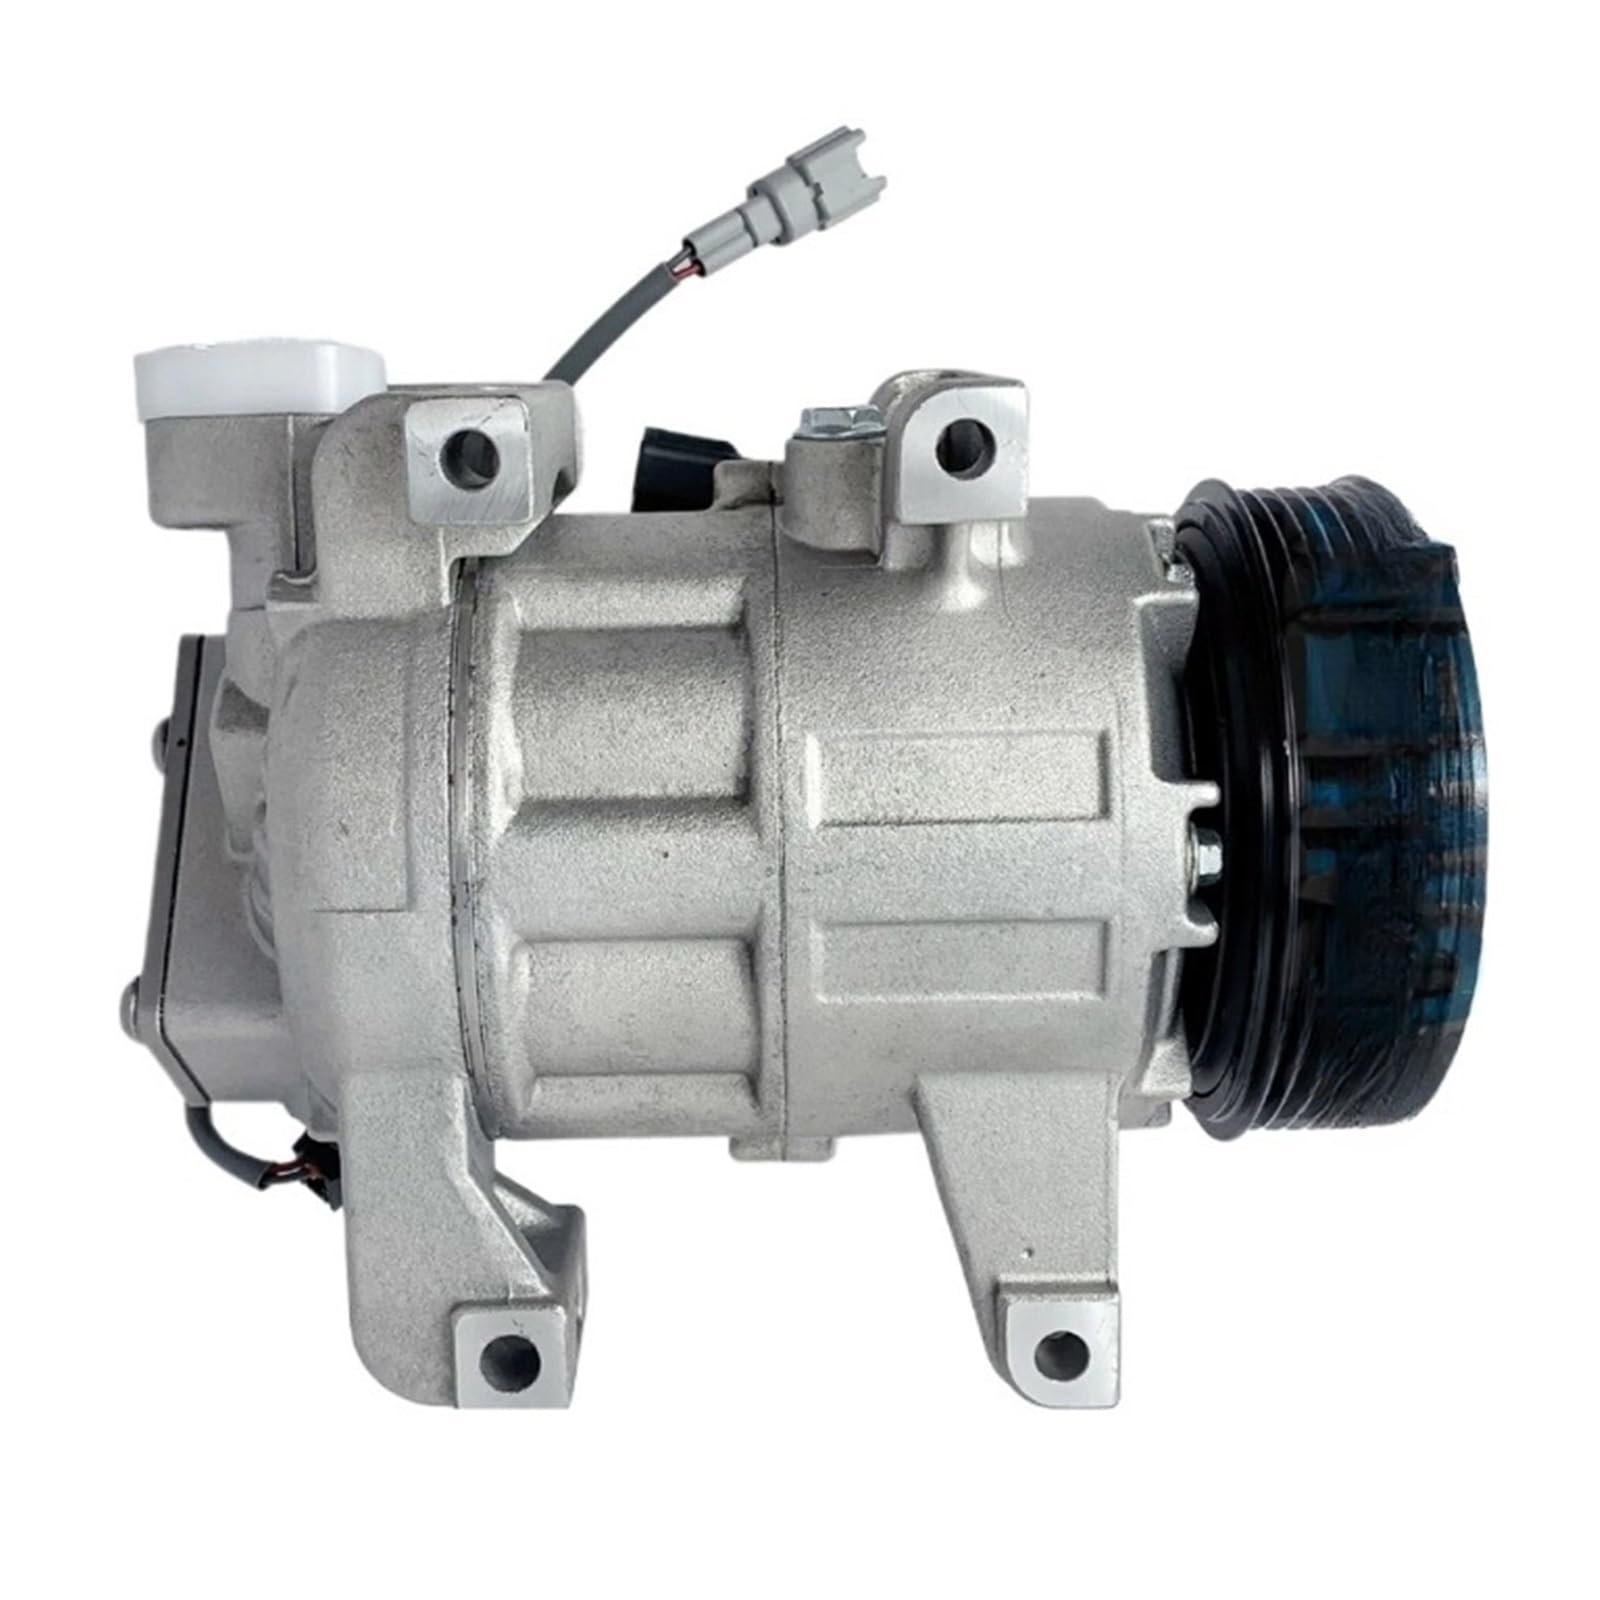 Auto-Klimakompressor, kompatibel mit Nissan Altima 2,5 l 2013–201792600-3TA0D 92600-3TA0E 926003TA0E 926003TA0D Z0016491A Z00164914 von ACSGASCA